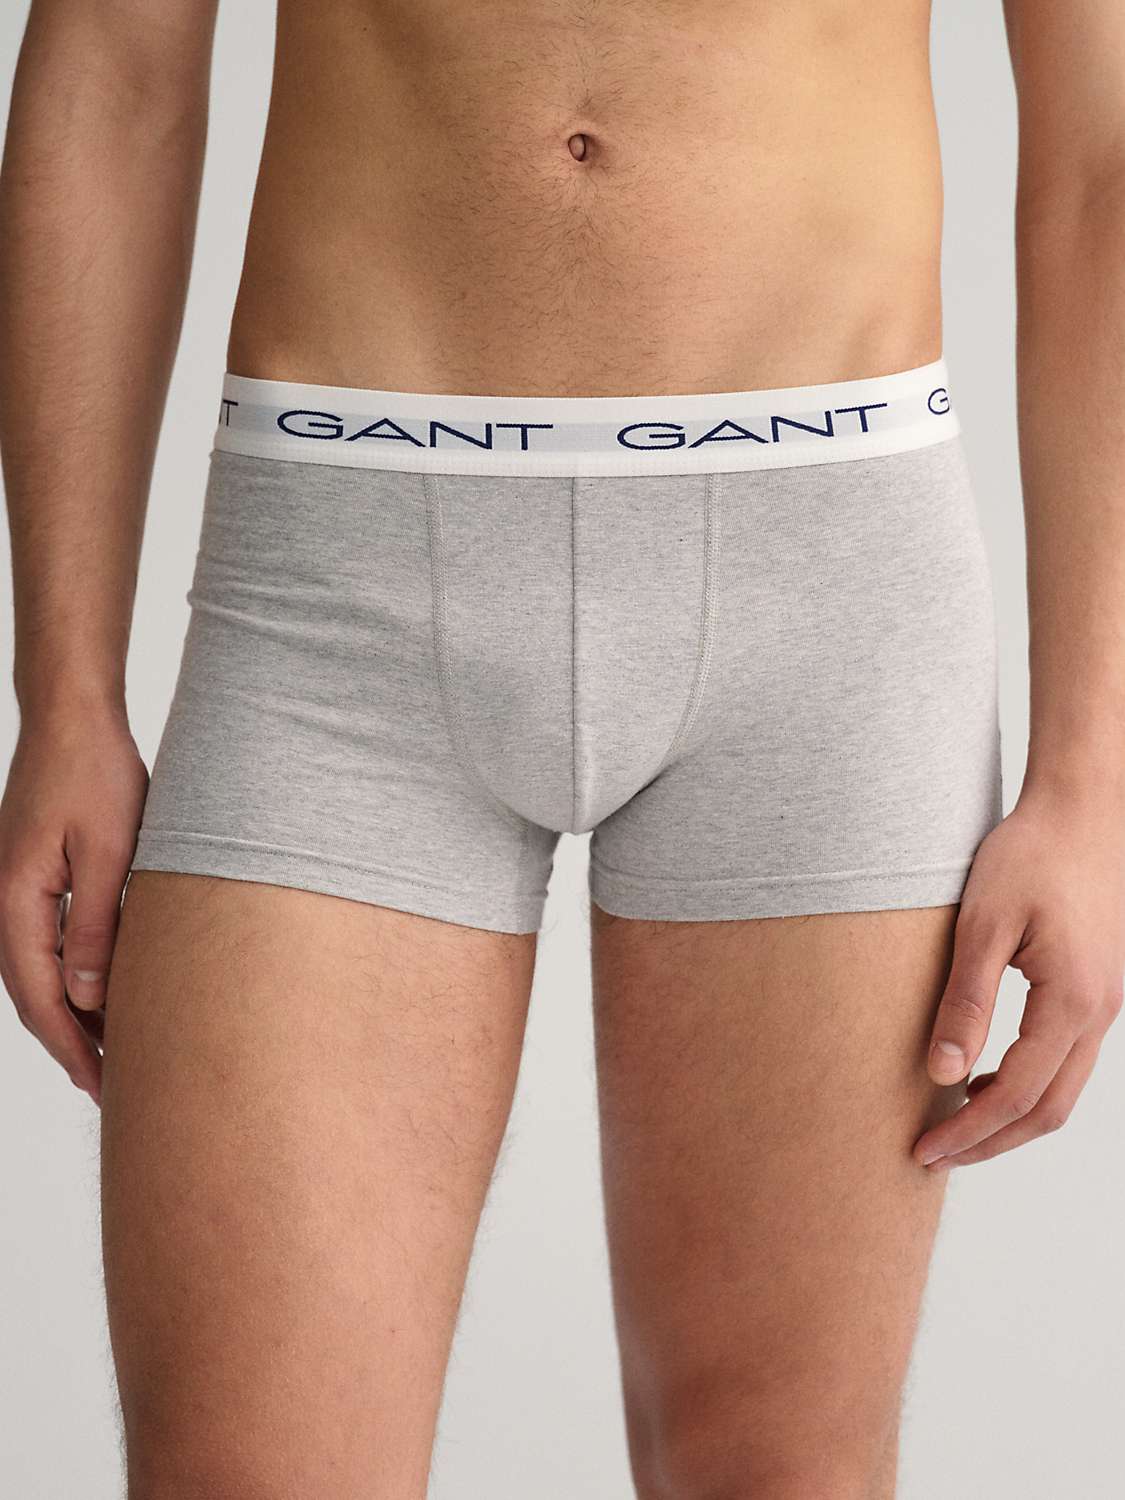 Buy GANT Cotton Trunks, Pack of 3, Multi Online at johnlewis.com